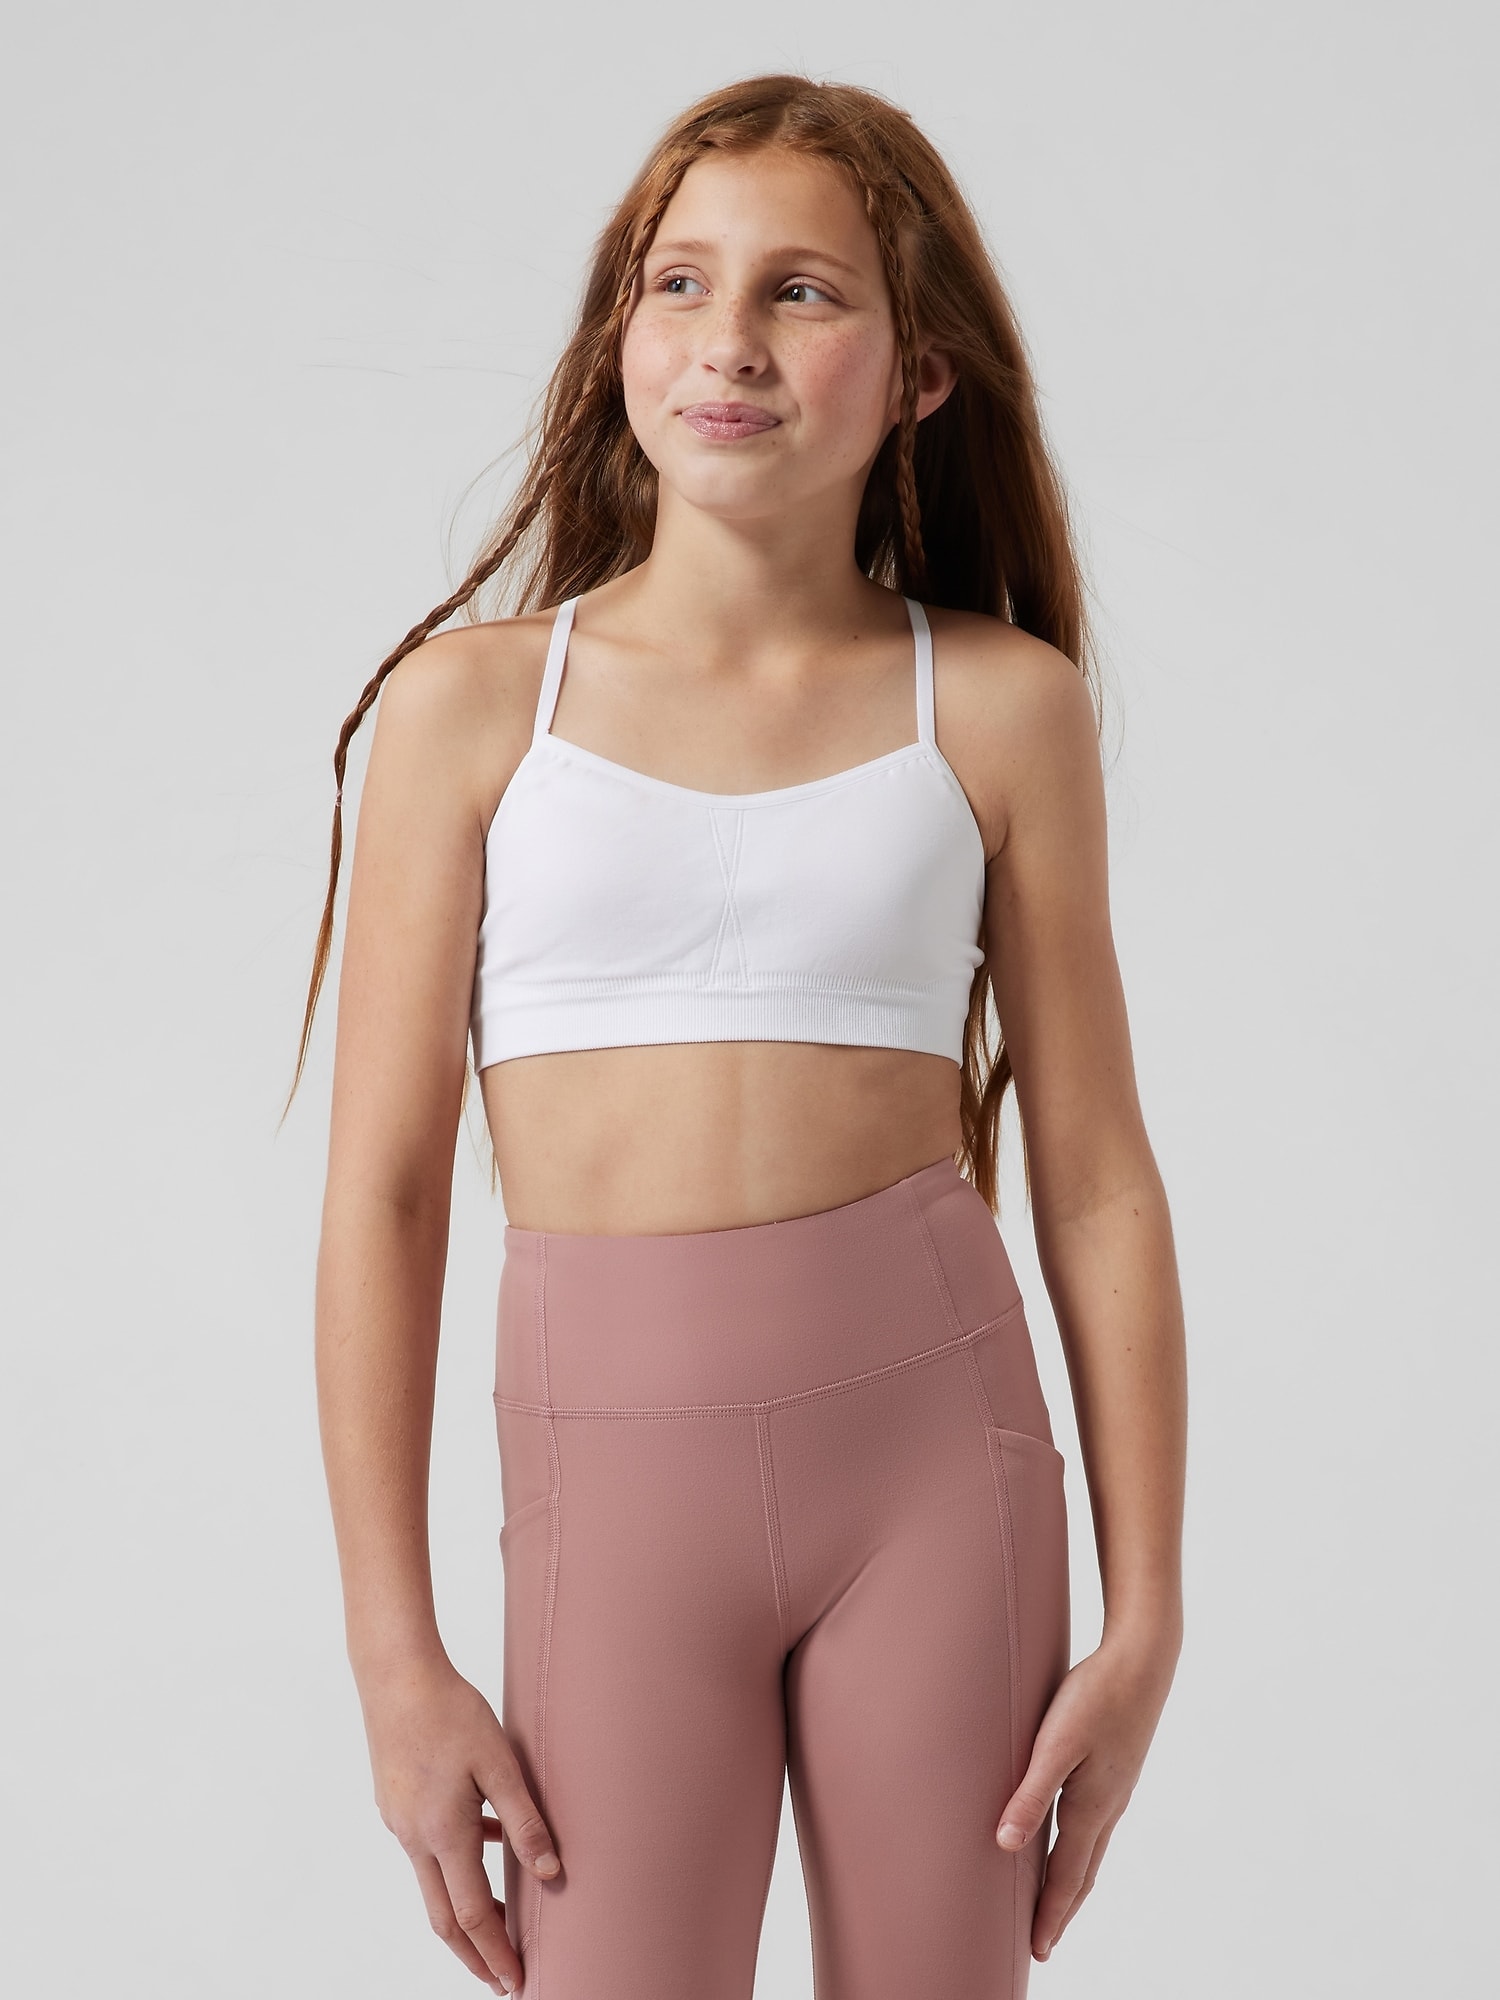 Girls Training Bras Young Girl Bra Underwear